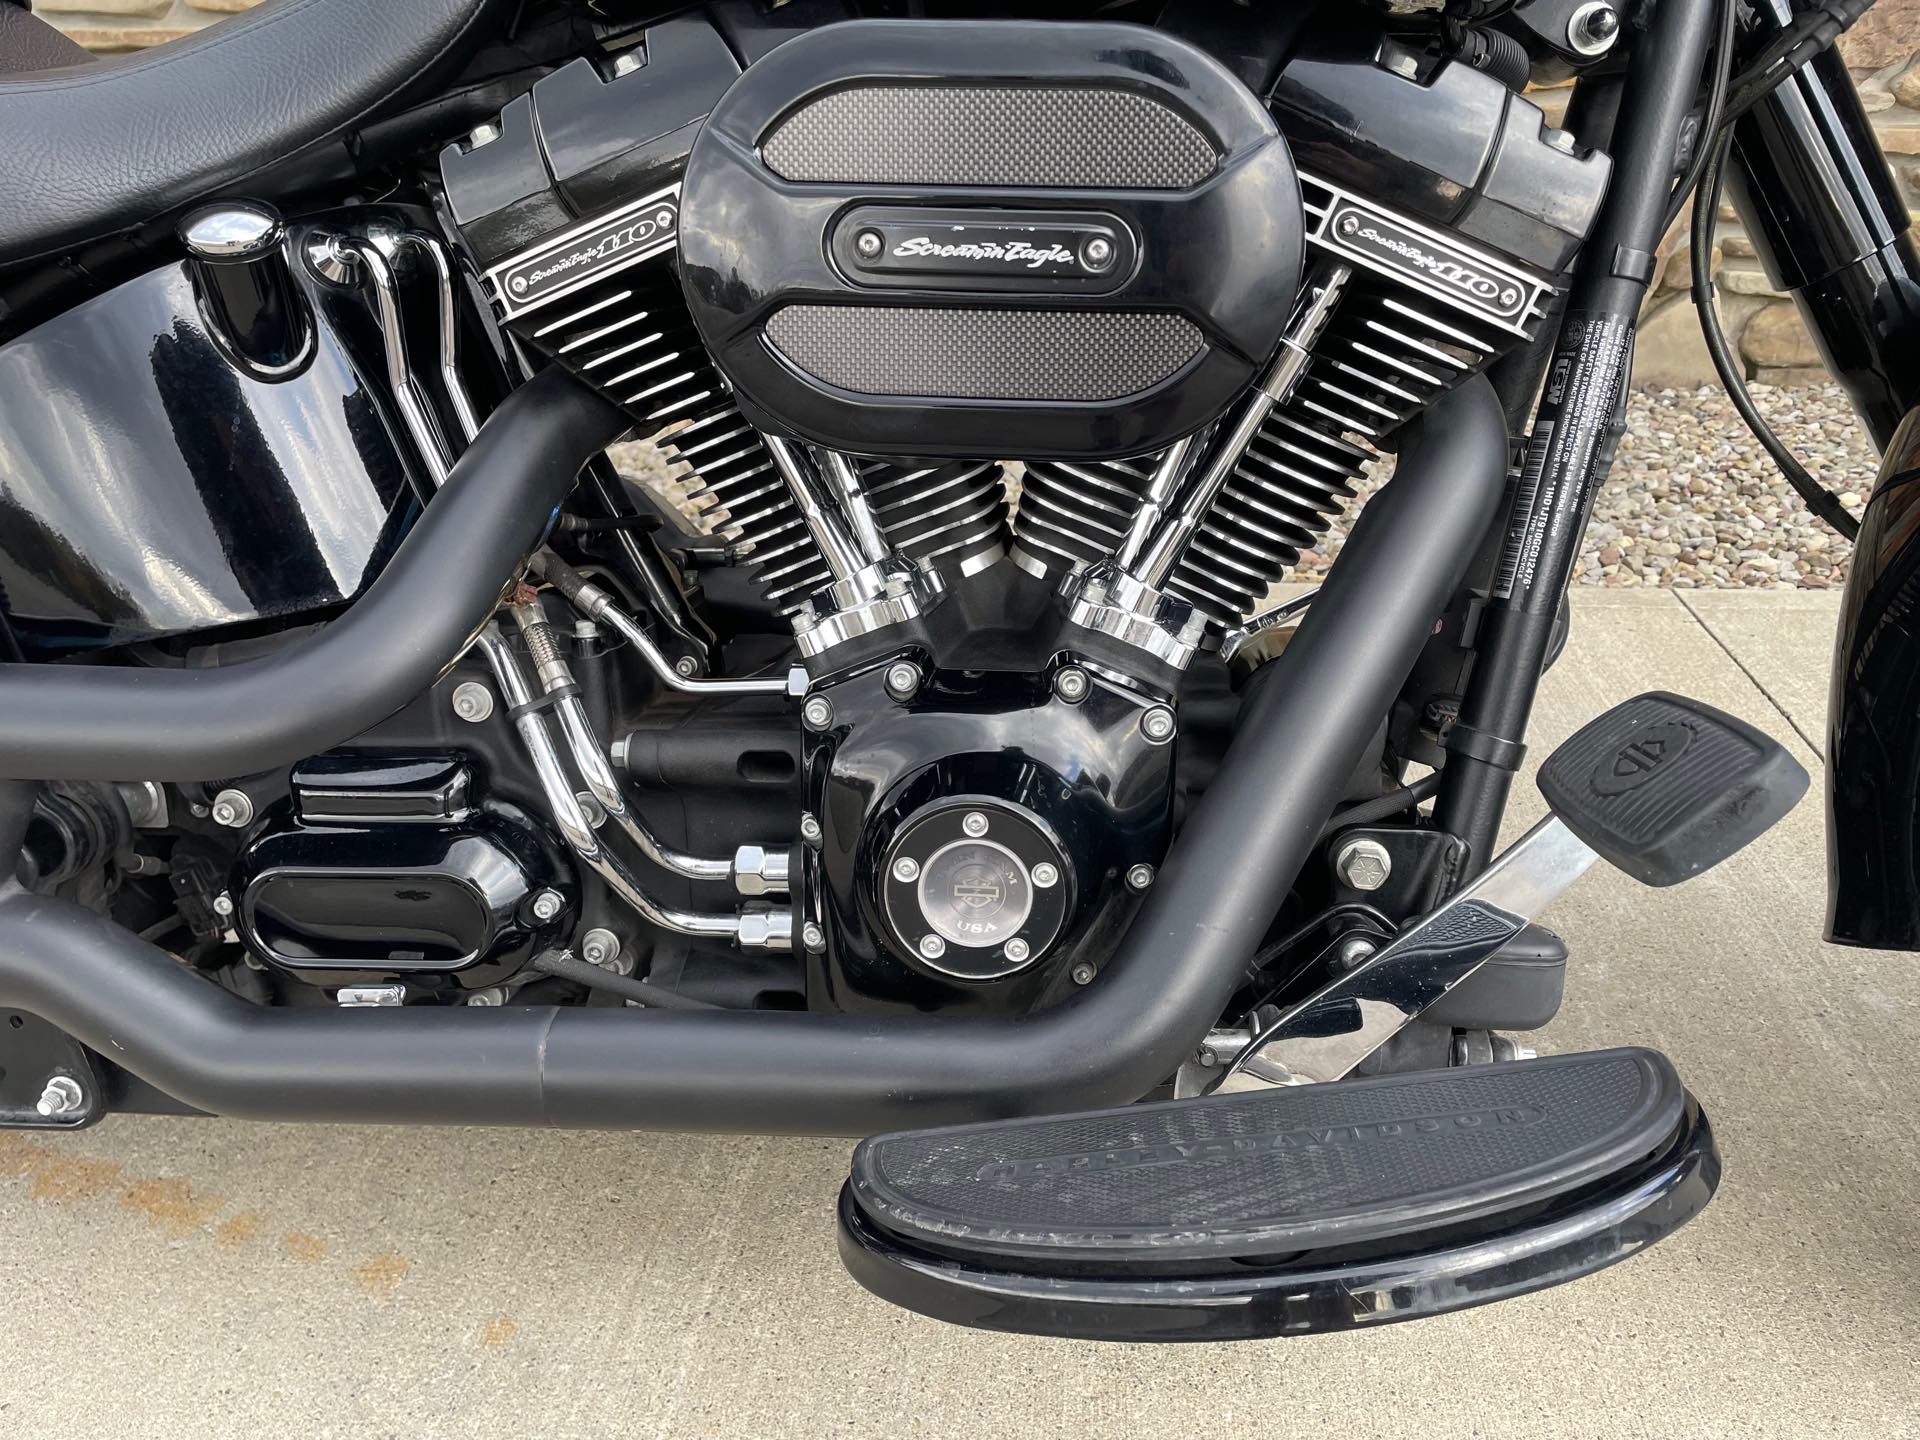 2016 Harley-Davidson S-Series Fat Boy at Arkport Cycles